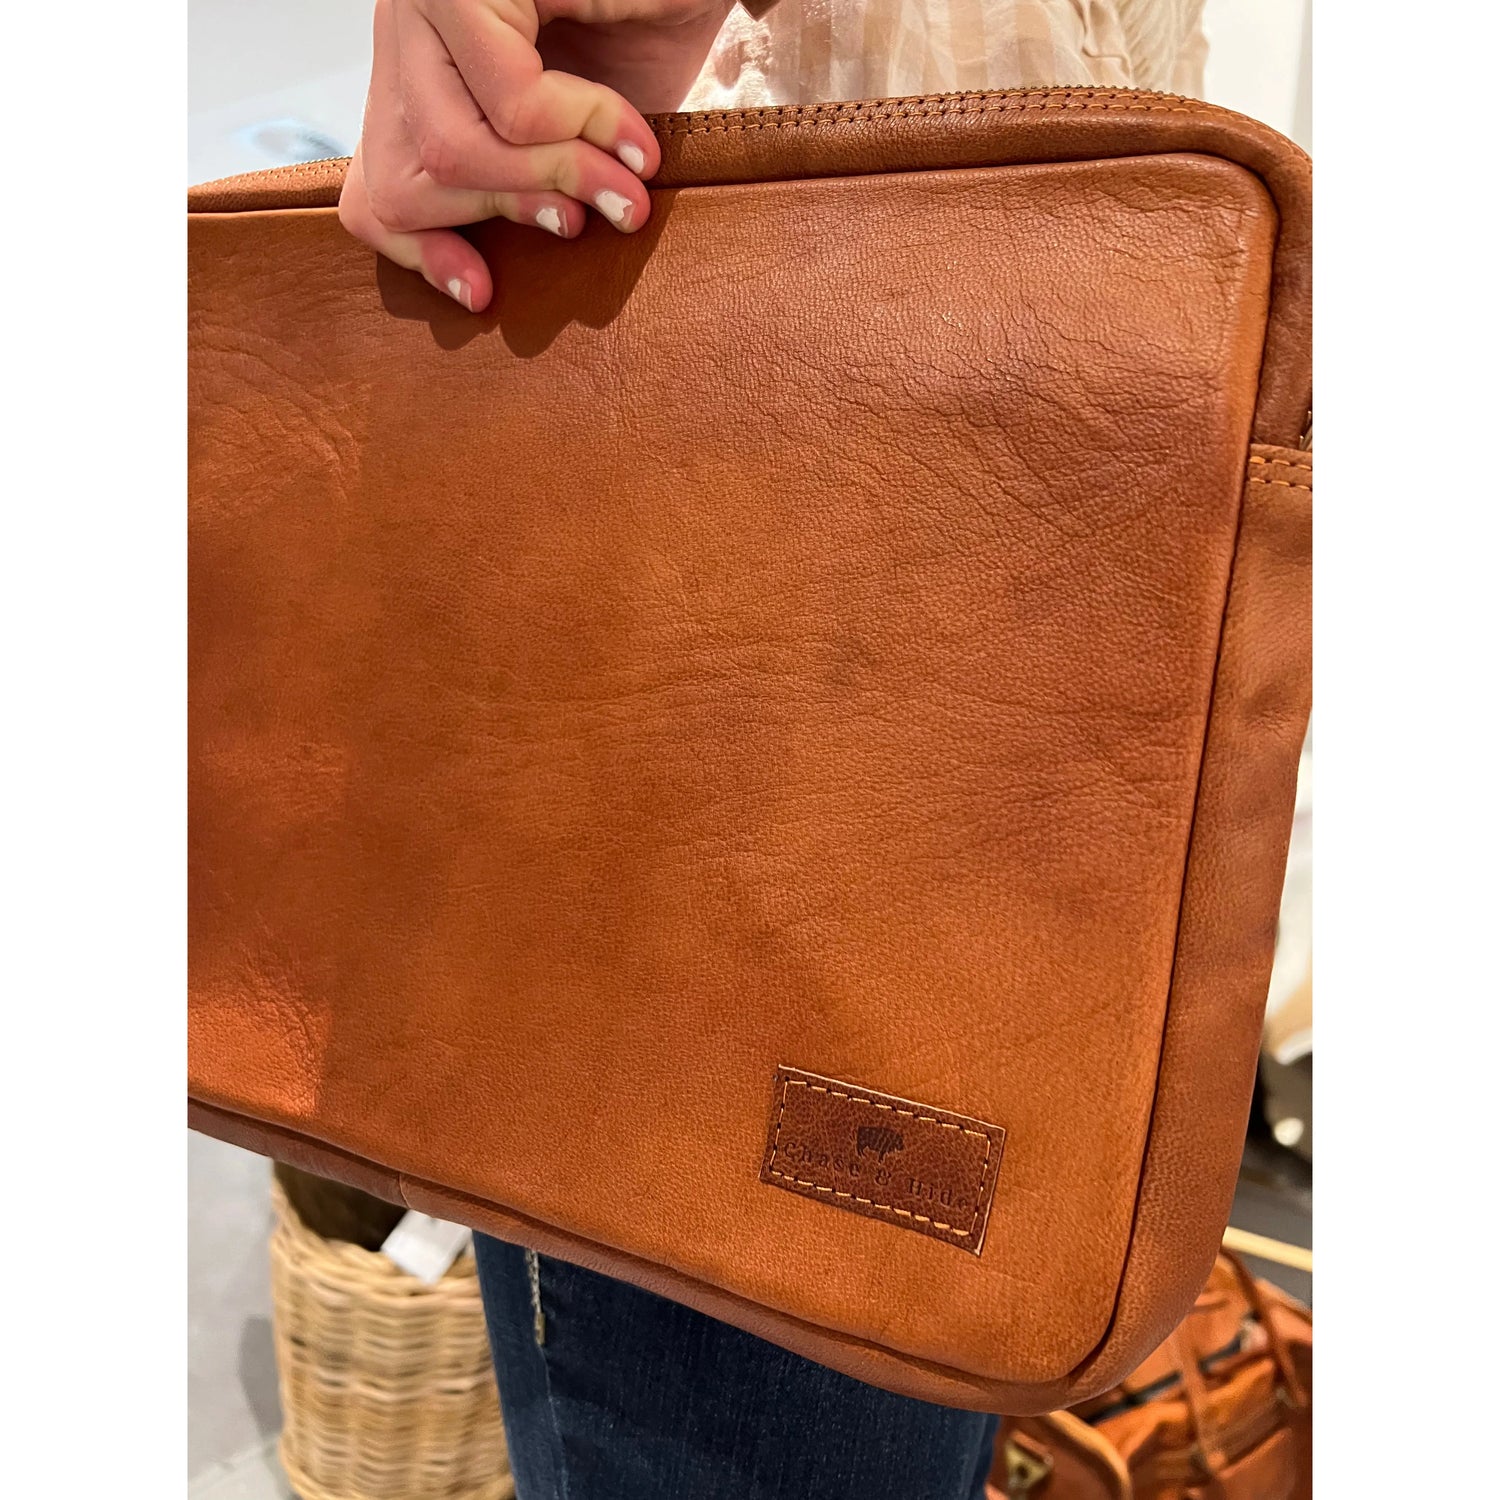 Laptop Satchel - The Brookstead Bag bs